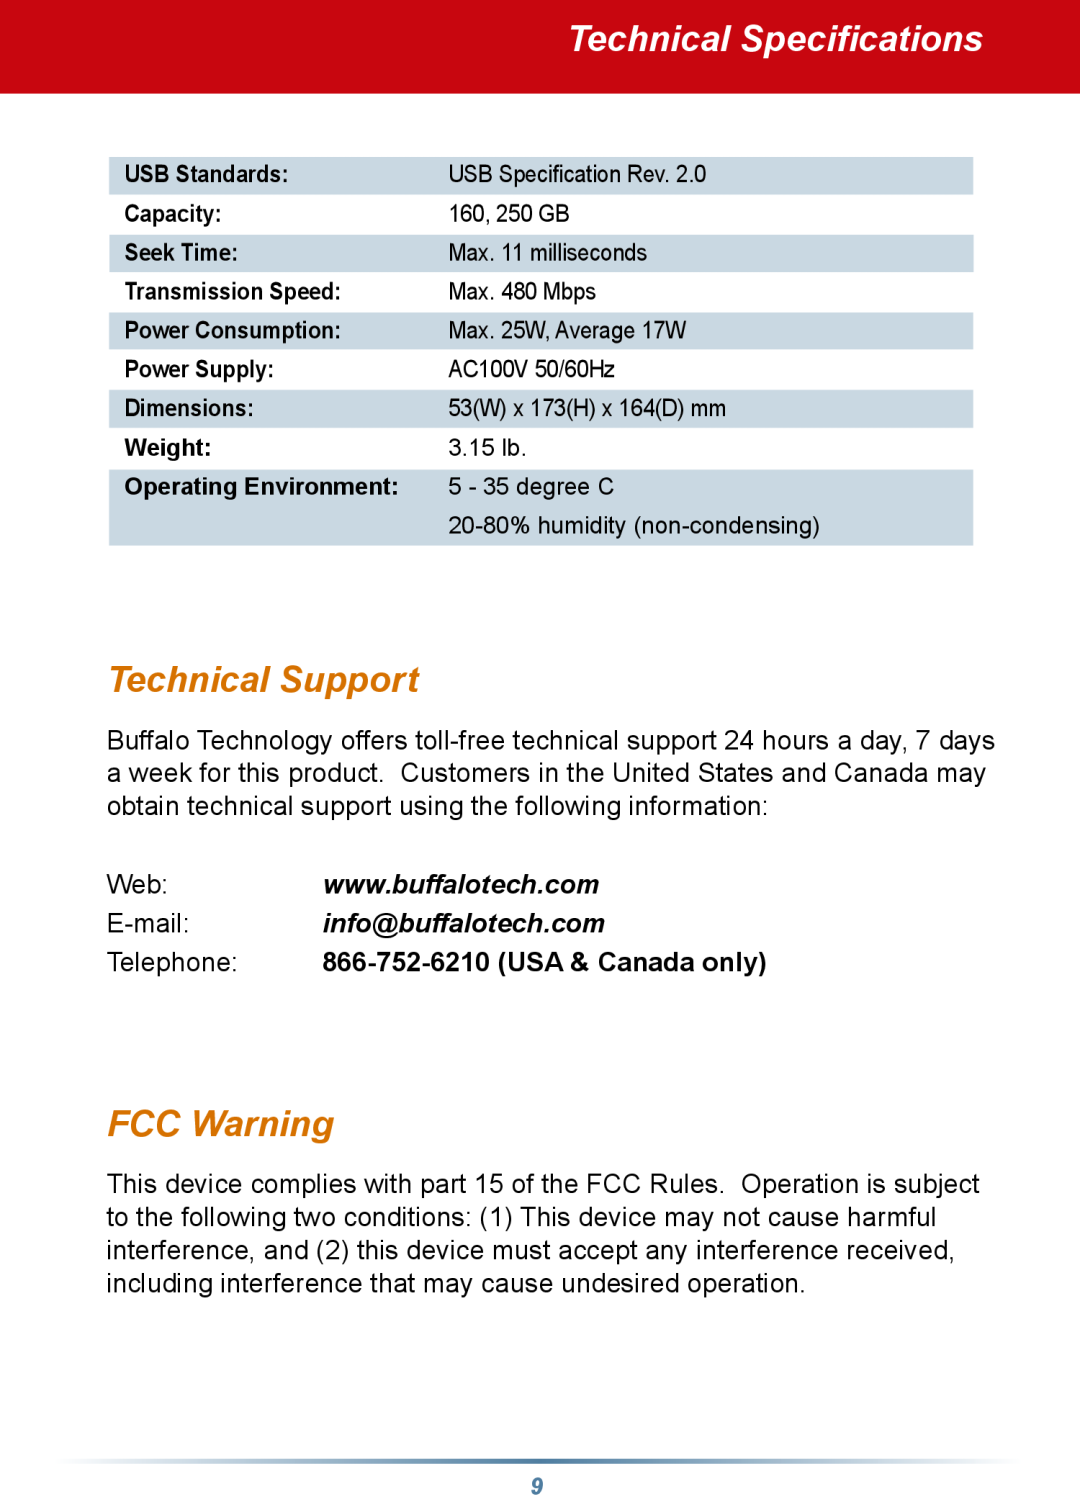 Buffalo Technology HD-HBXXXU2 Technical Specifications, Technical Support, FCC Warning, E-mail info@buffalotech.com 